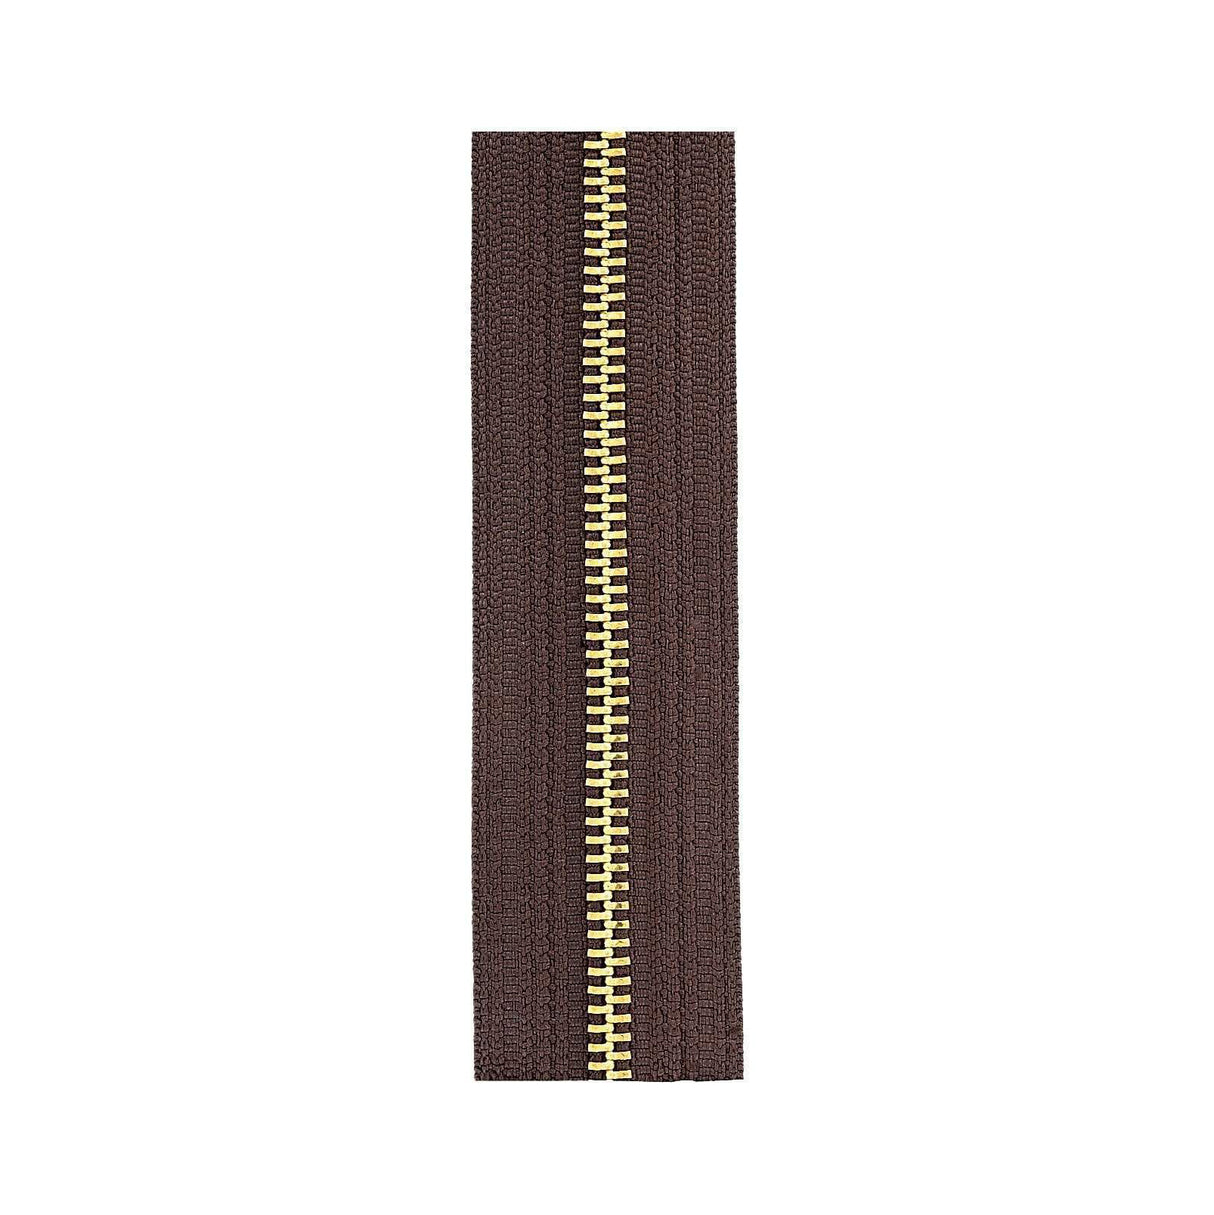 #5 Brown, YKK Metal Chain Zipper Tape with Brass Teeth, #5M-BRO-B